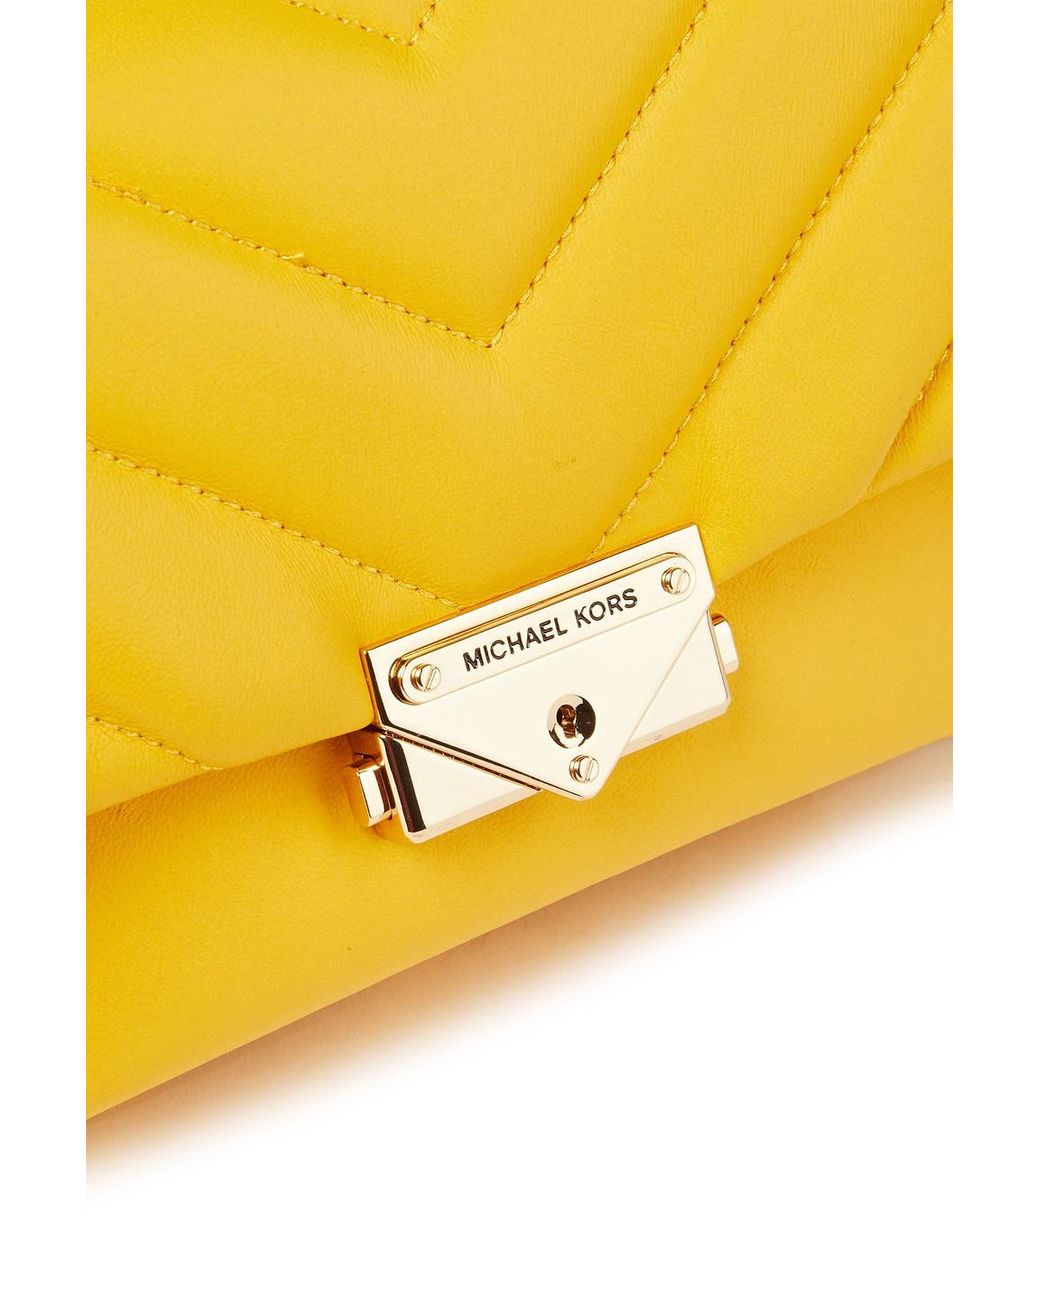 Michael Kors yellow glazed leather alexis crossbody shoulder bag